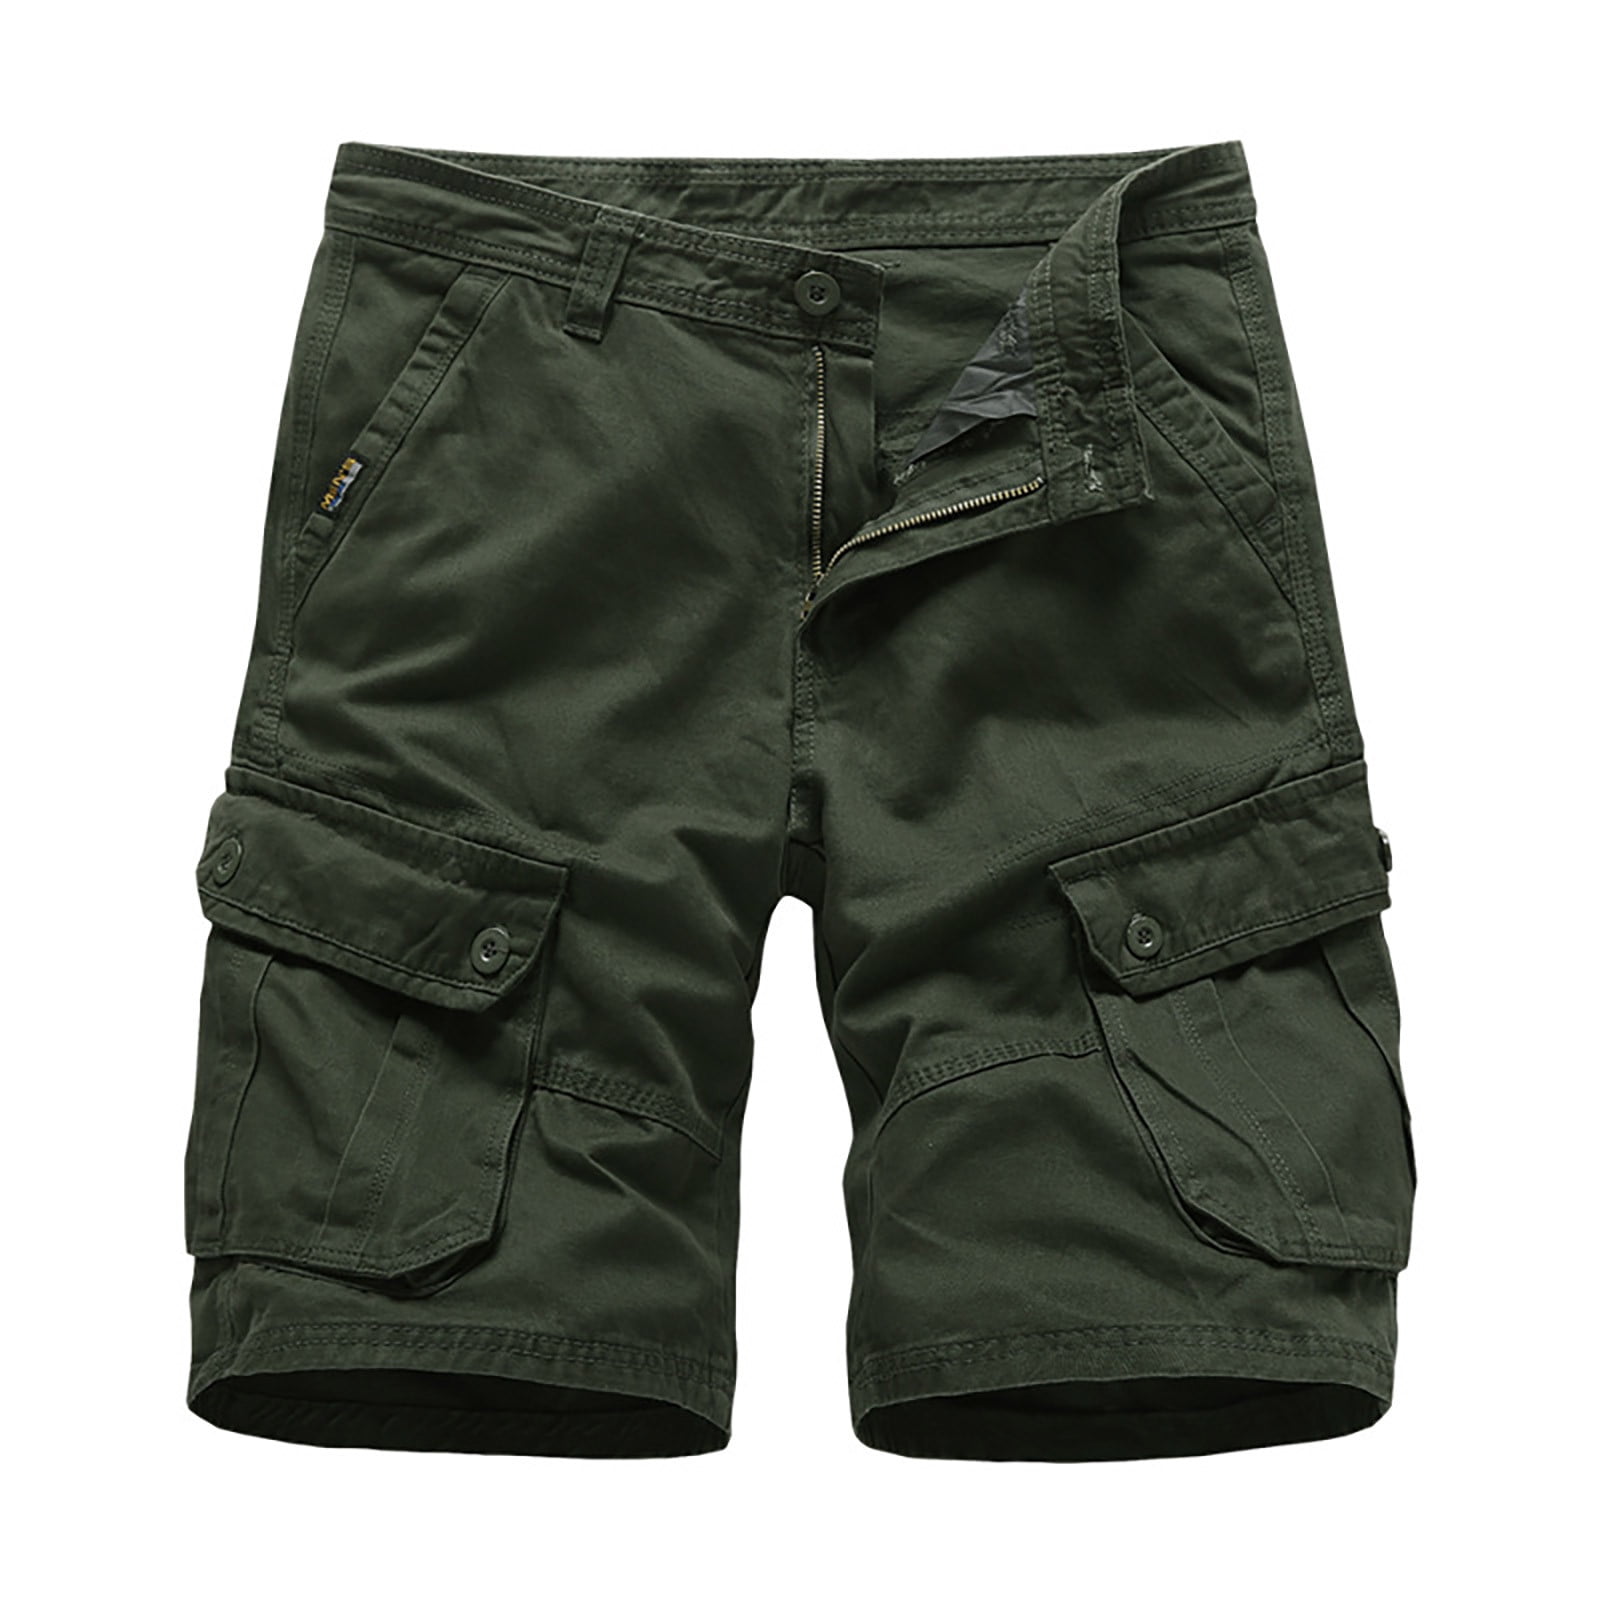 Men Cargo Shorts Clearance,TIANEK Casual Multi-Pocket Bermuda Shorts ...